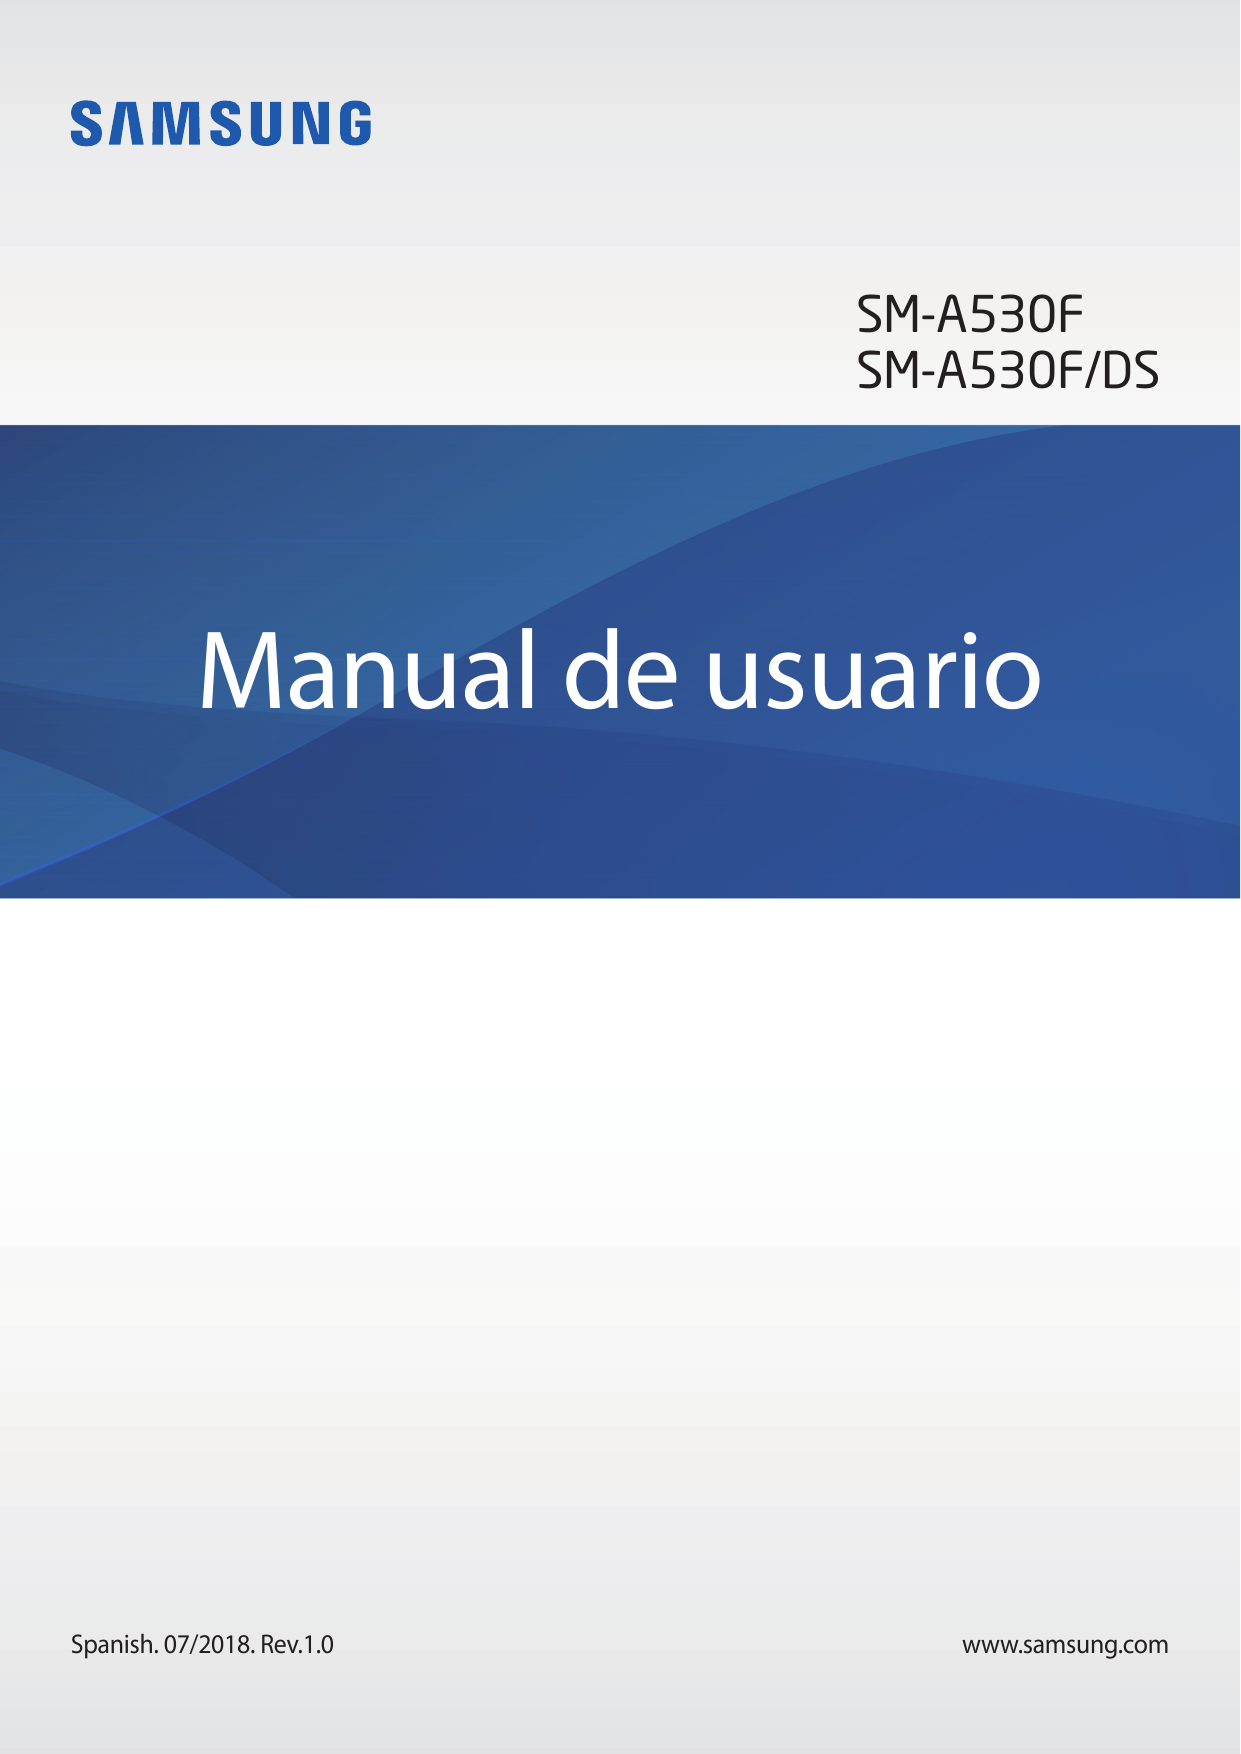 SM-A530FSM-A530F/DSManual de usuarioSpanish. 07/2018. Rev.1.0www.samsung.com